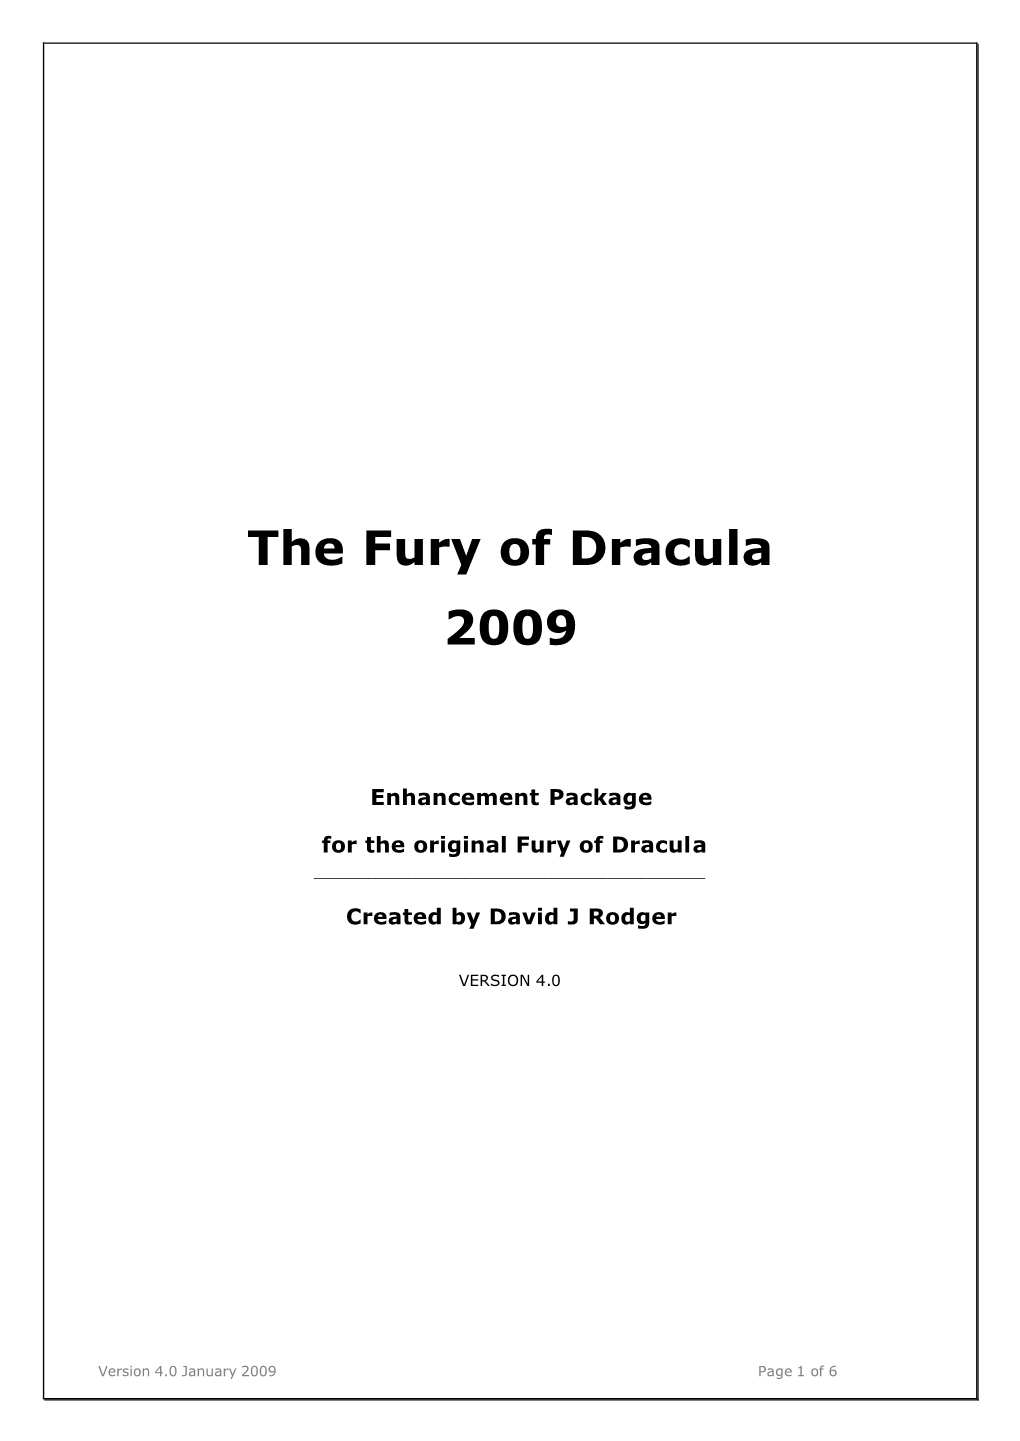 Fury of Dracula Expansion